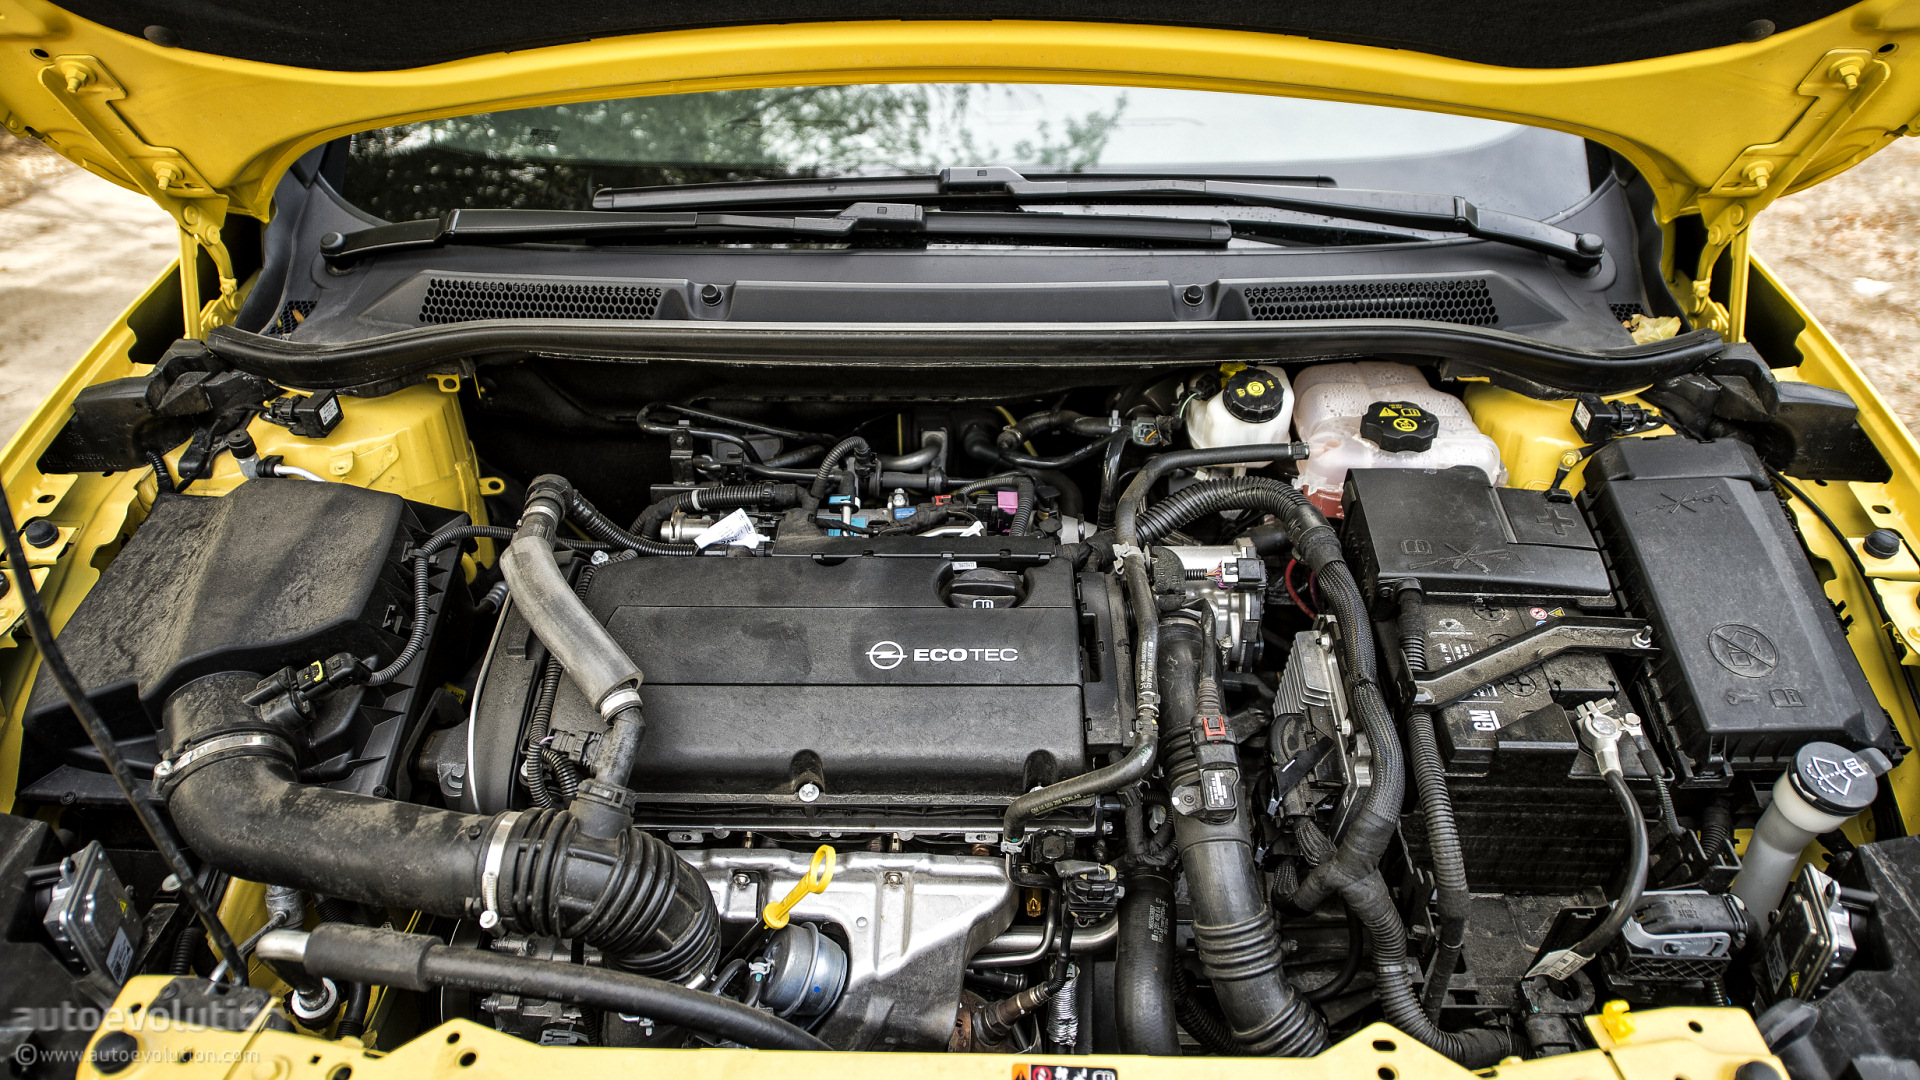 Opel Astra J OPC - Panel gaps, rust and a massive turbohole